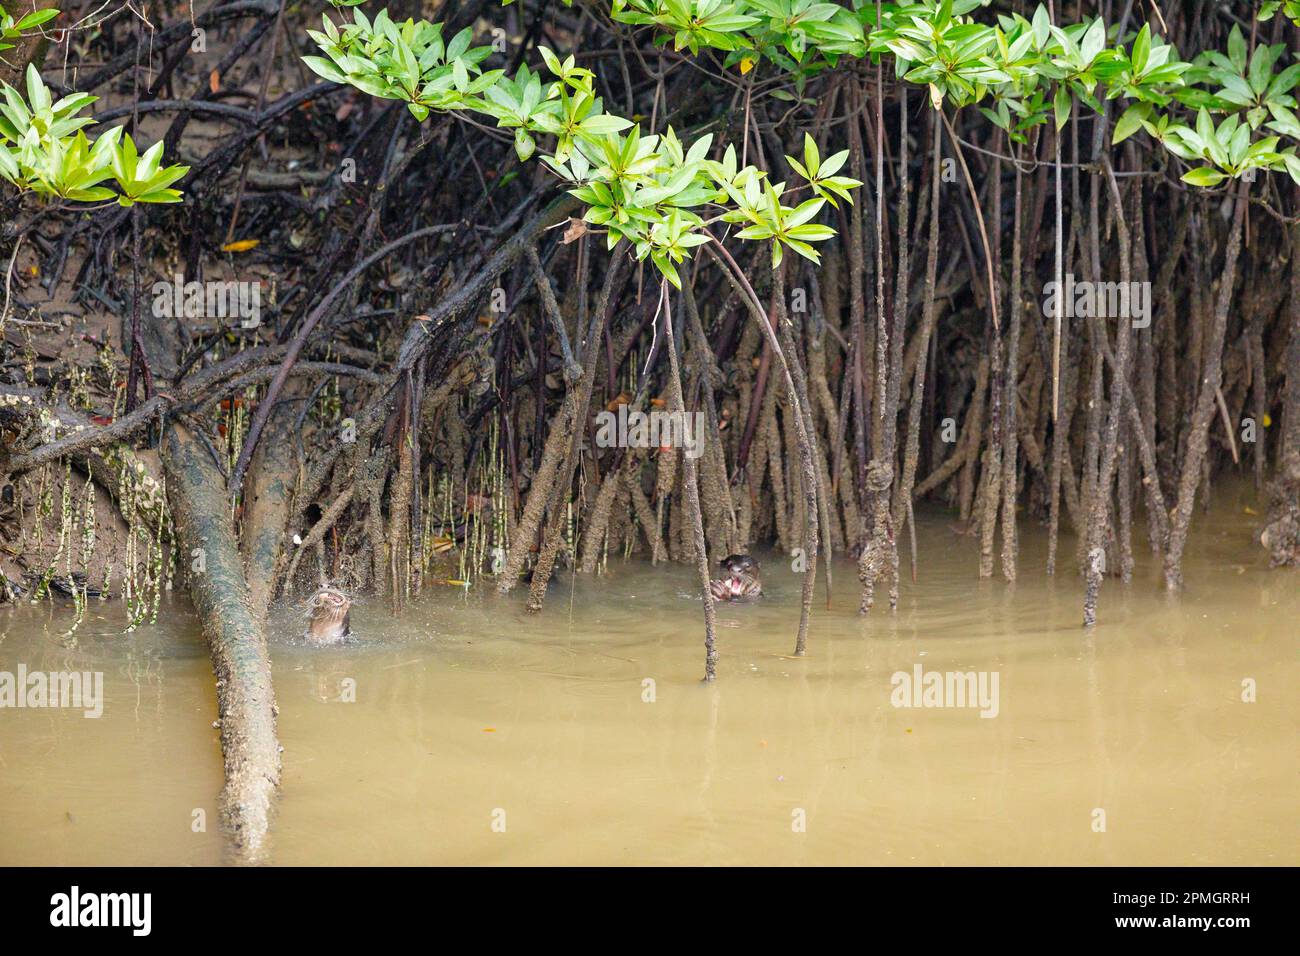 Due lontre lisce rivestite per la caccia di pesce tra le radici palafitte in un fiume di mangrovie, Singapore Foto Stock